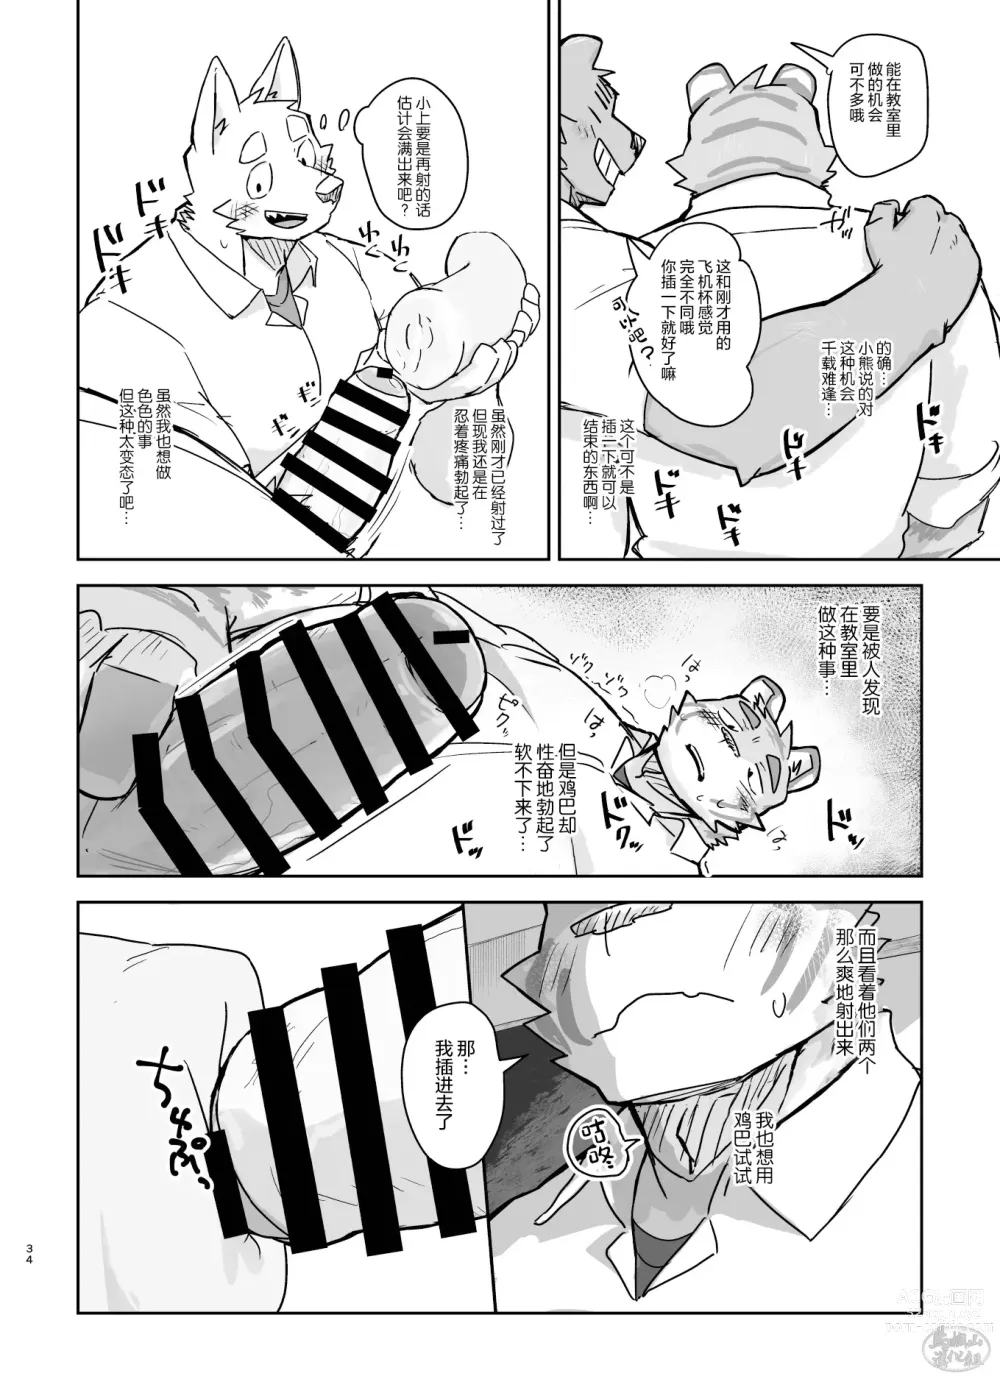 Page 34 of doujinshi 关于我在教室被榨精这件事